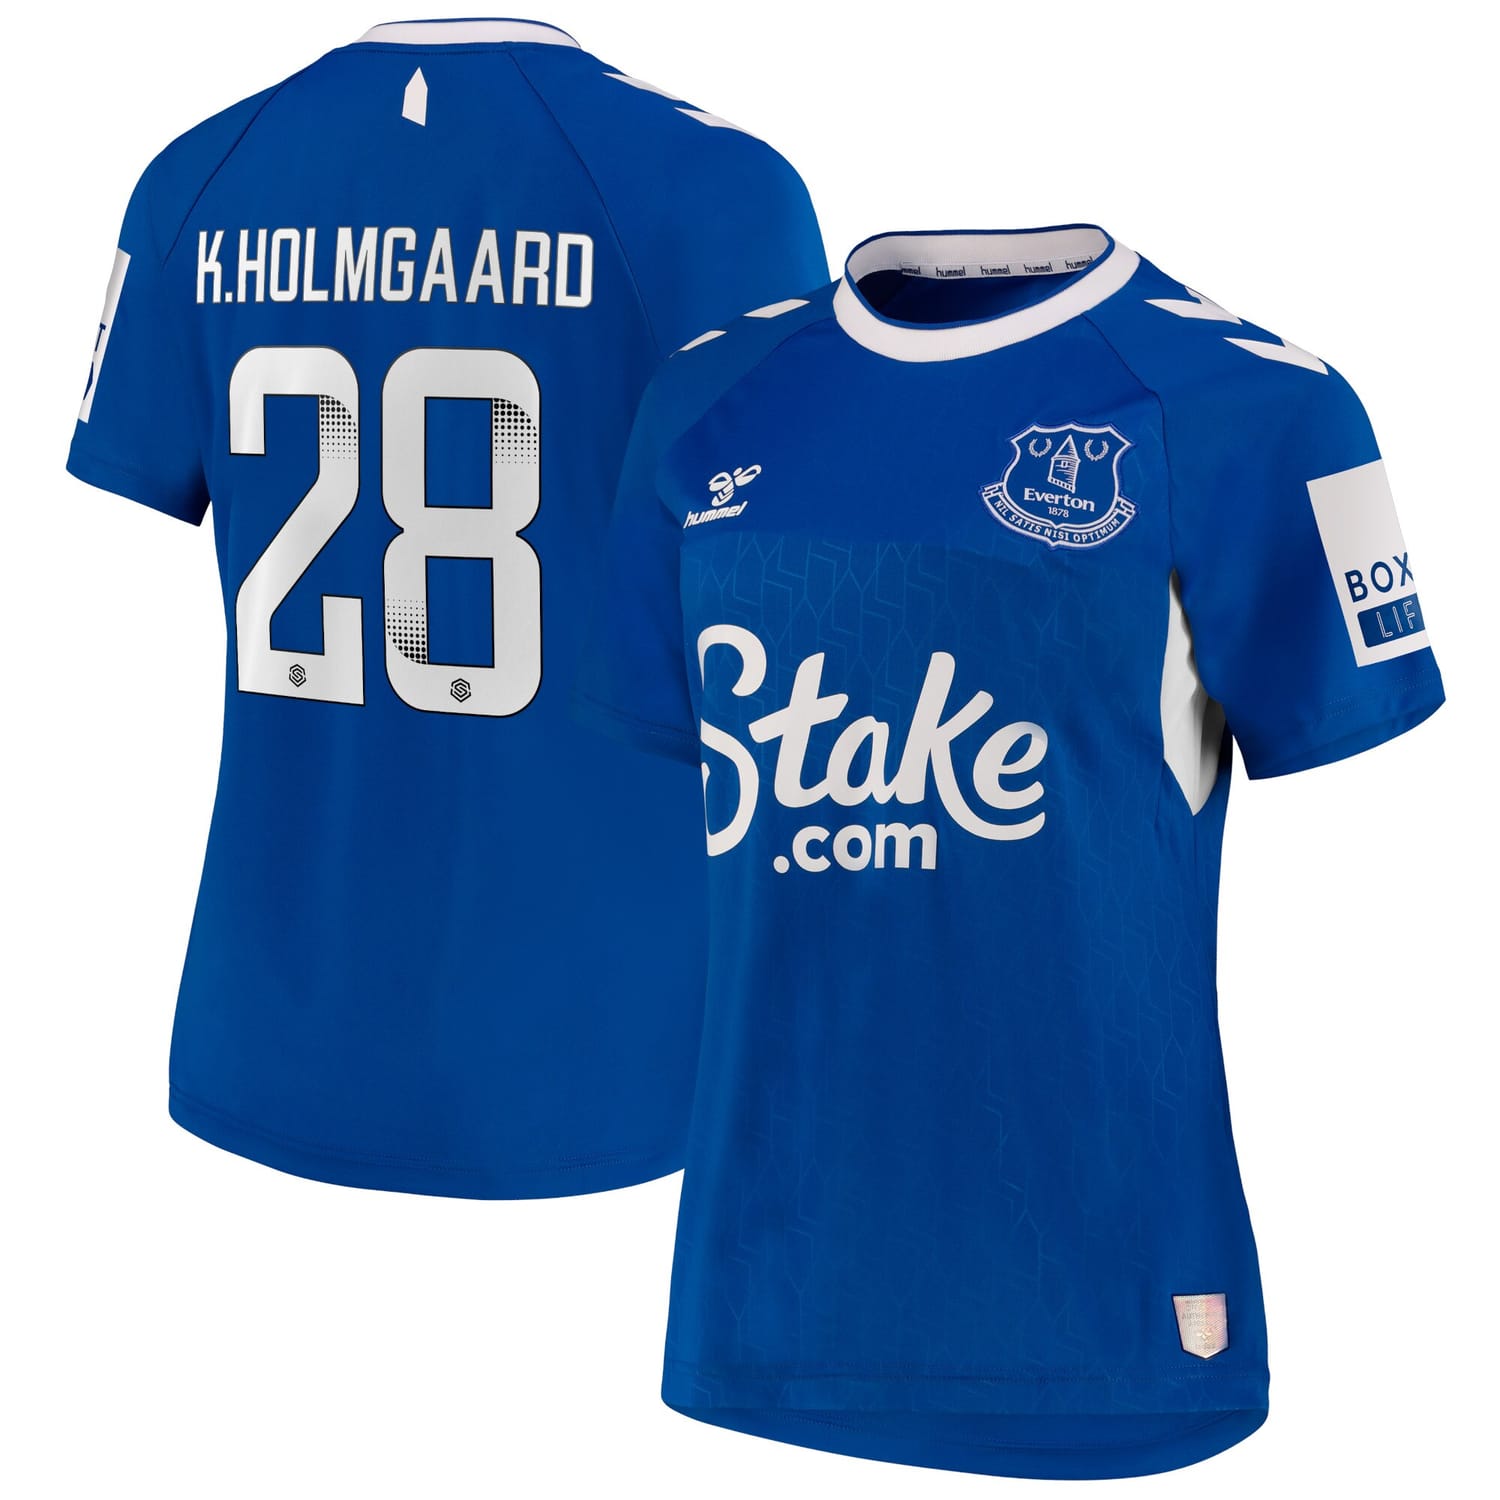 Premier League Everton Home Jersey Shirt 2022-23 player K.Holmgaard 28 printing for Women